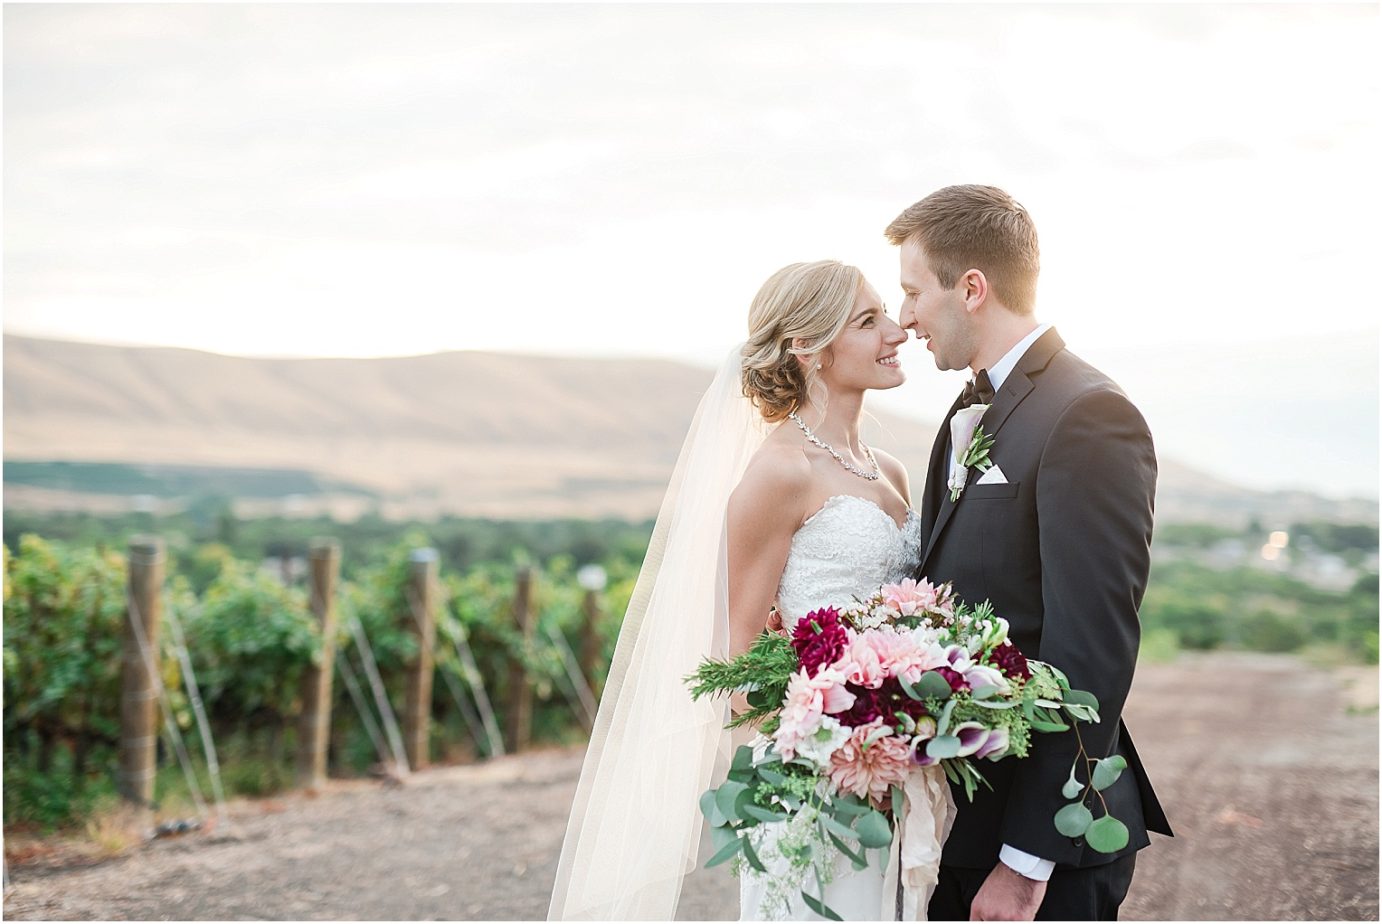 Terra Blanca Winery Wedding Benton City Photographer Armin and Kendall bride and groom sunset photo